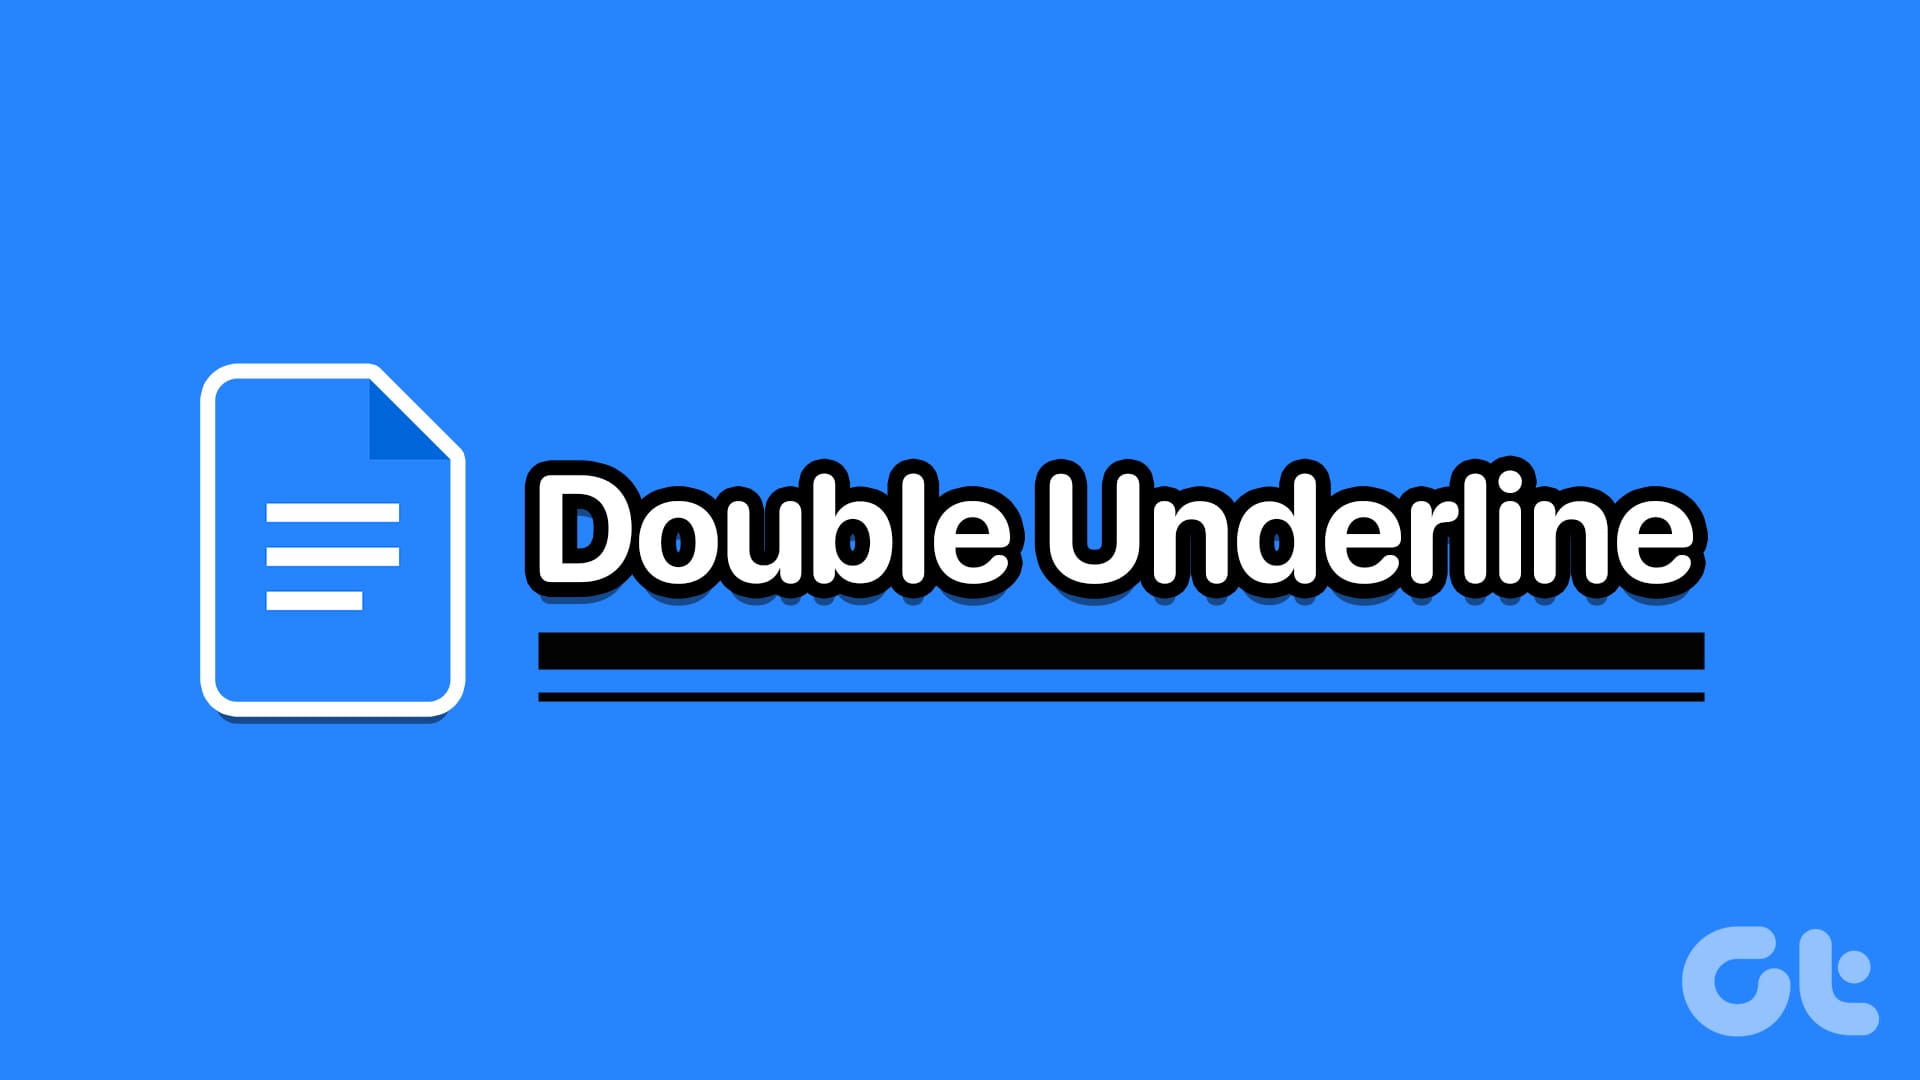 N_Best_Ways_to_Double_Underline_Text_in_Google_Docs 1